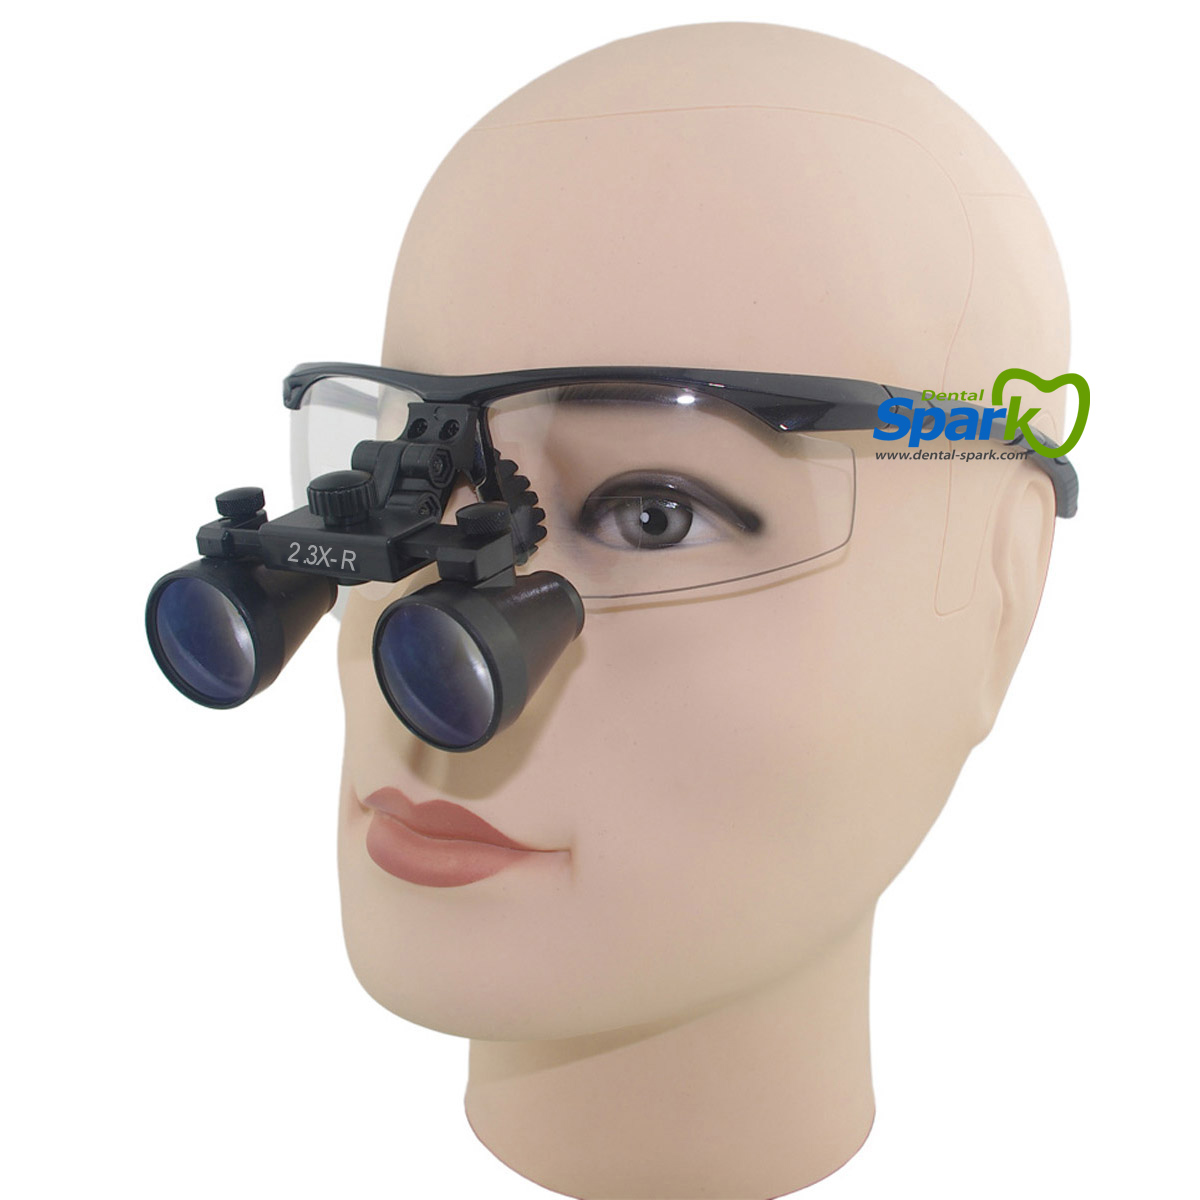 2.3 x Magnification Professional Dental Loupes by Spark Black BP Sports Frame and Adjustable Pupil Distance Model #SM2.3